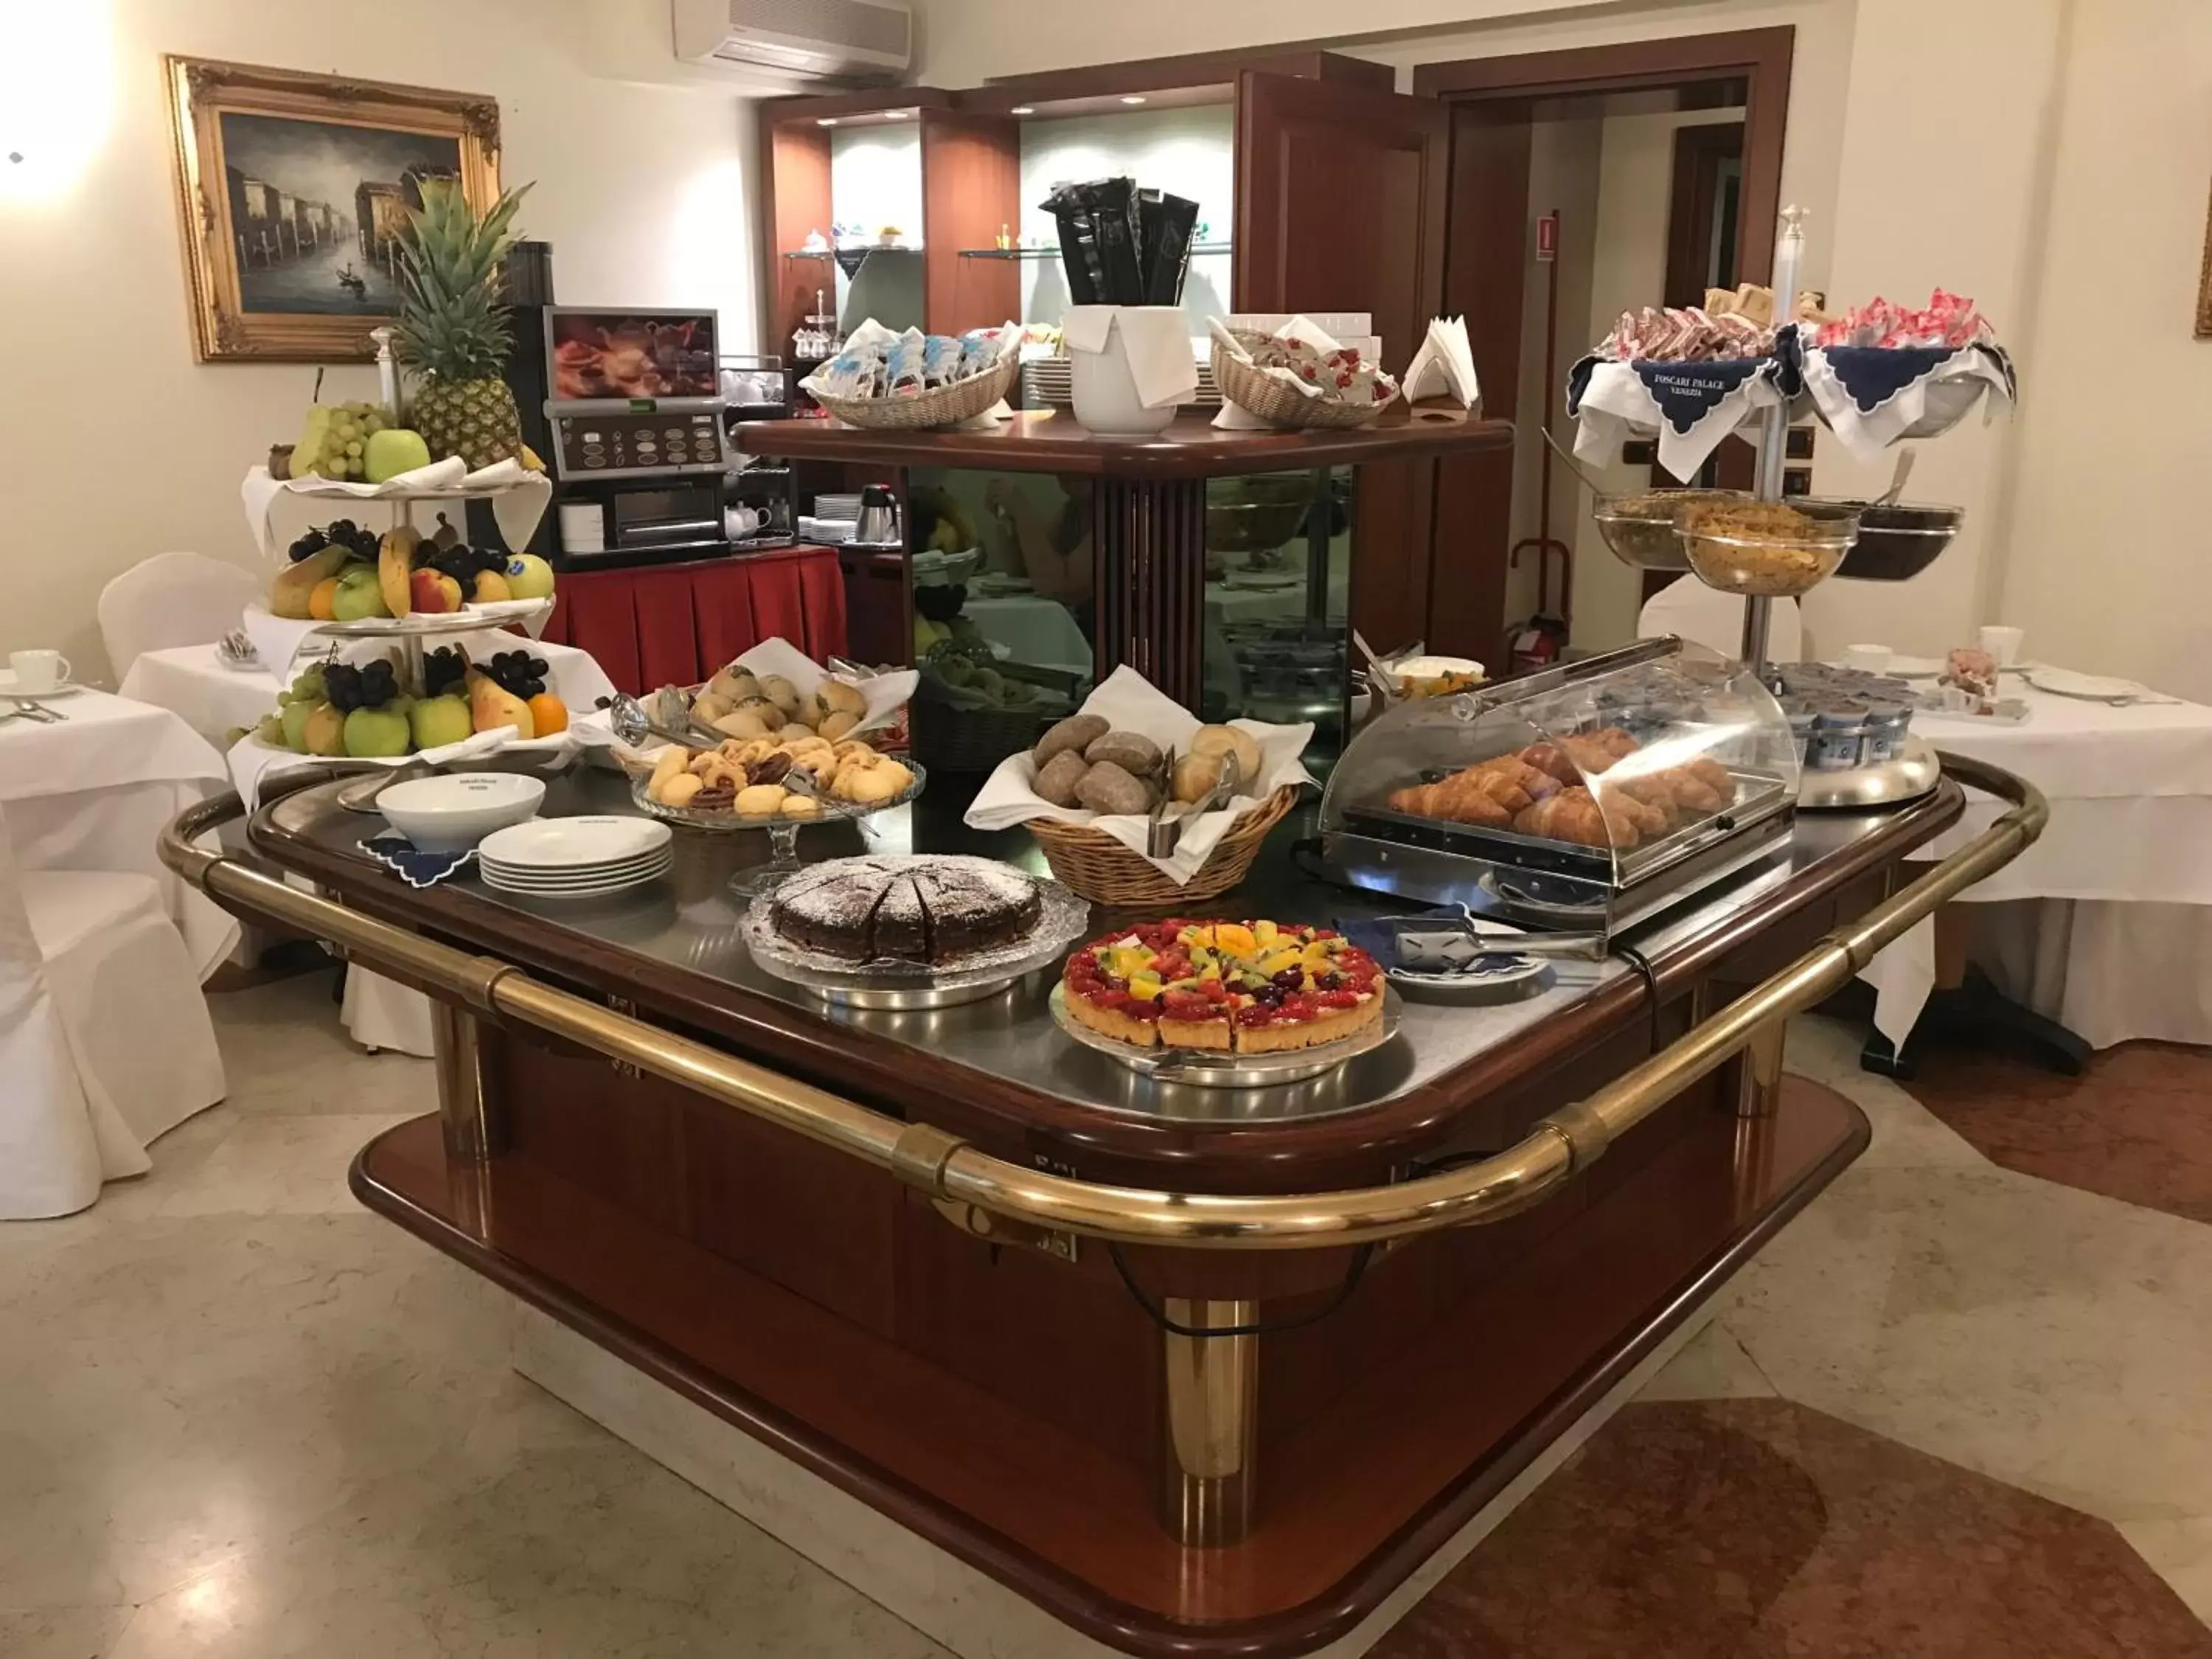 Food and drinks in Foscari Palace